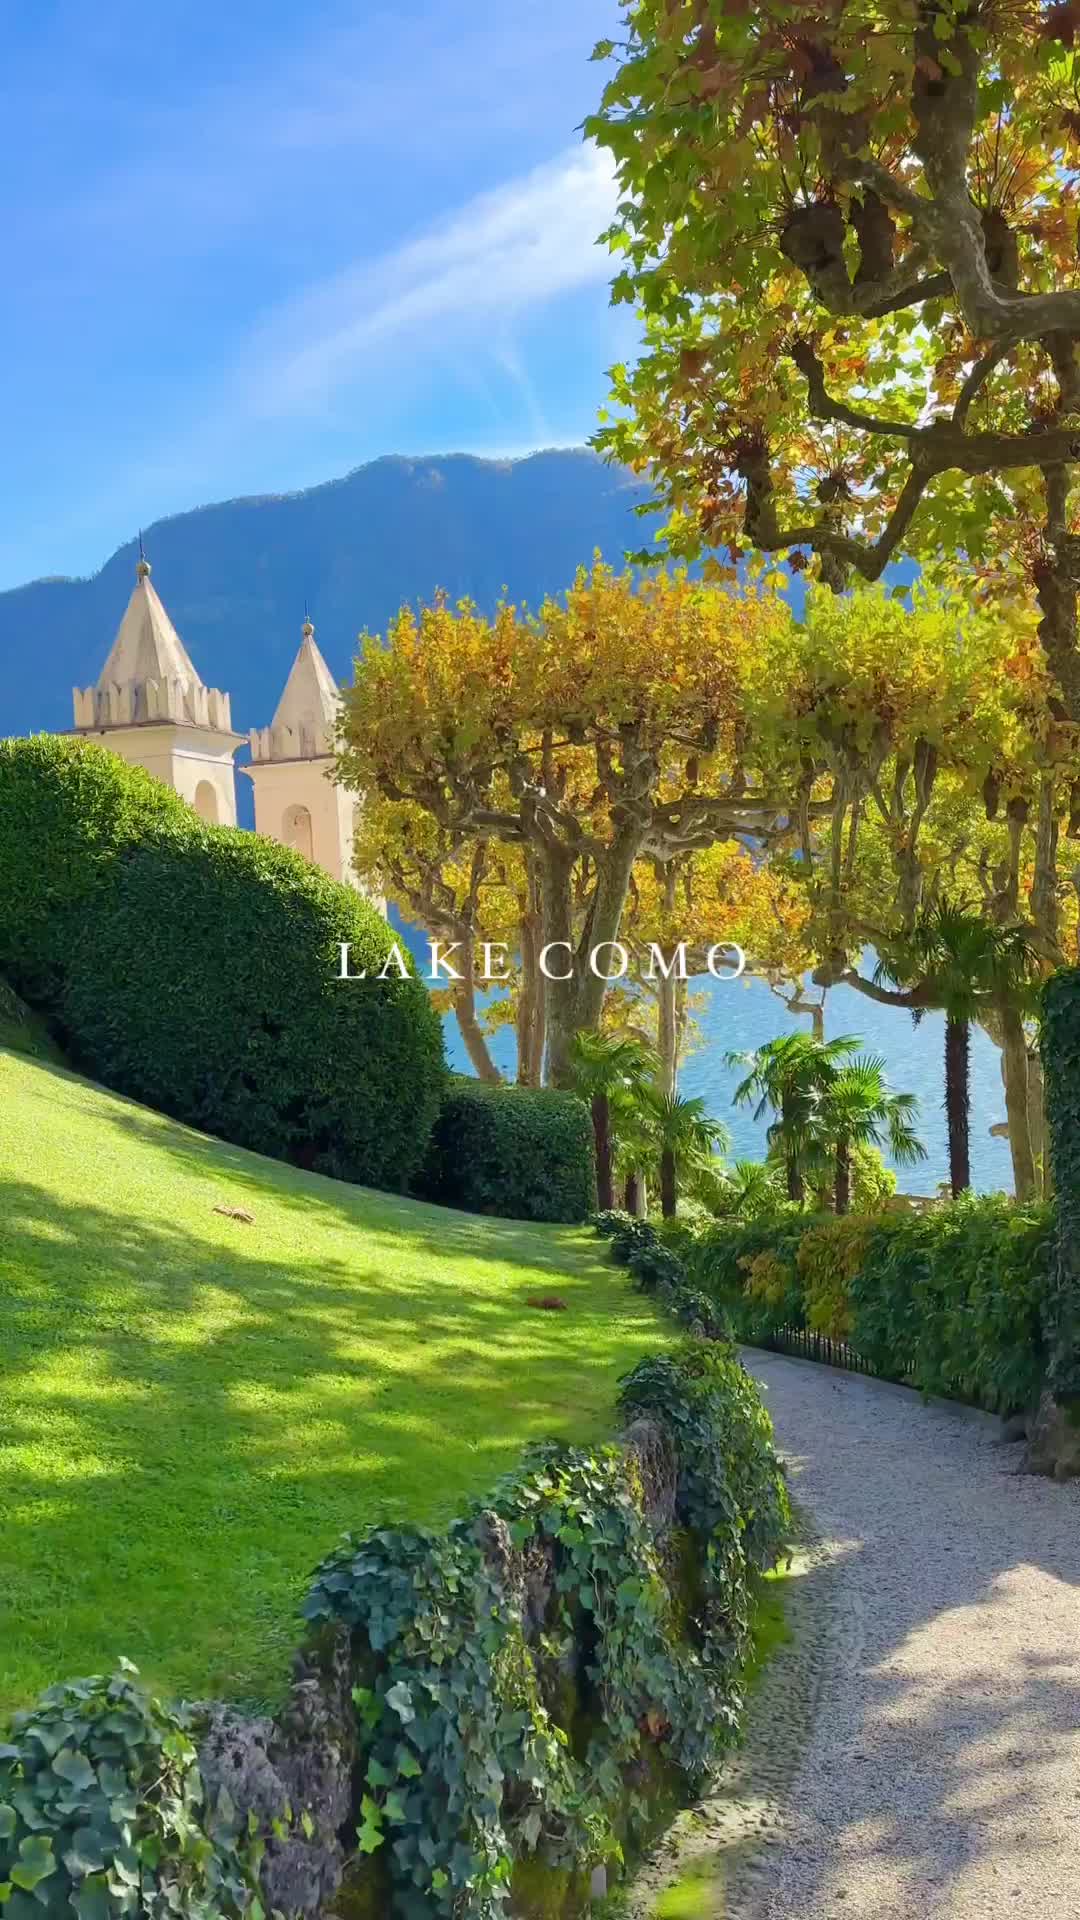 In Love with Lake Como: Explore Blevio, Italy